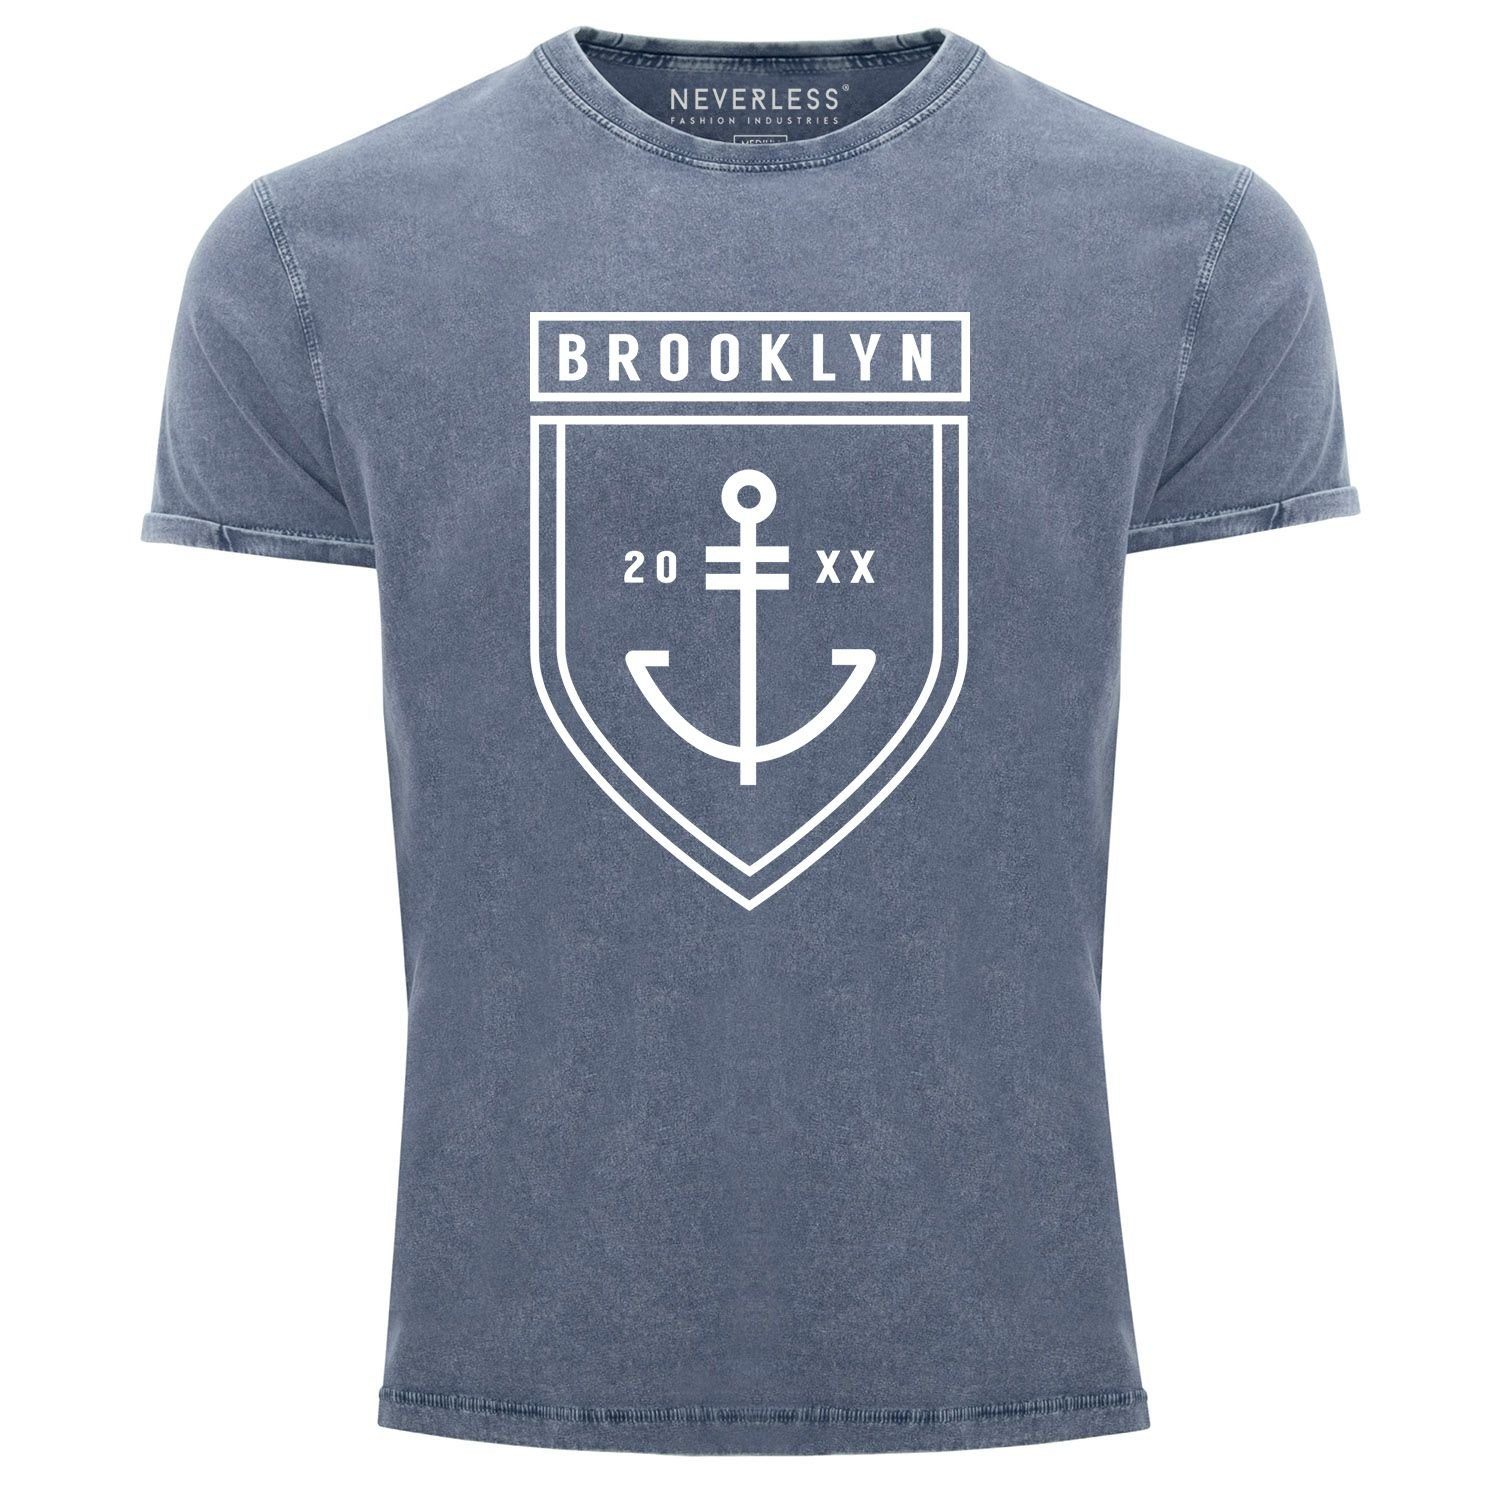 Neverless Print-Shirt Cooles Angesagtes Herren T-Shirt Vintage Shirt Brooklyn Anker Aufdruck Used Look Slim Fit Neverless® mit Print blau